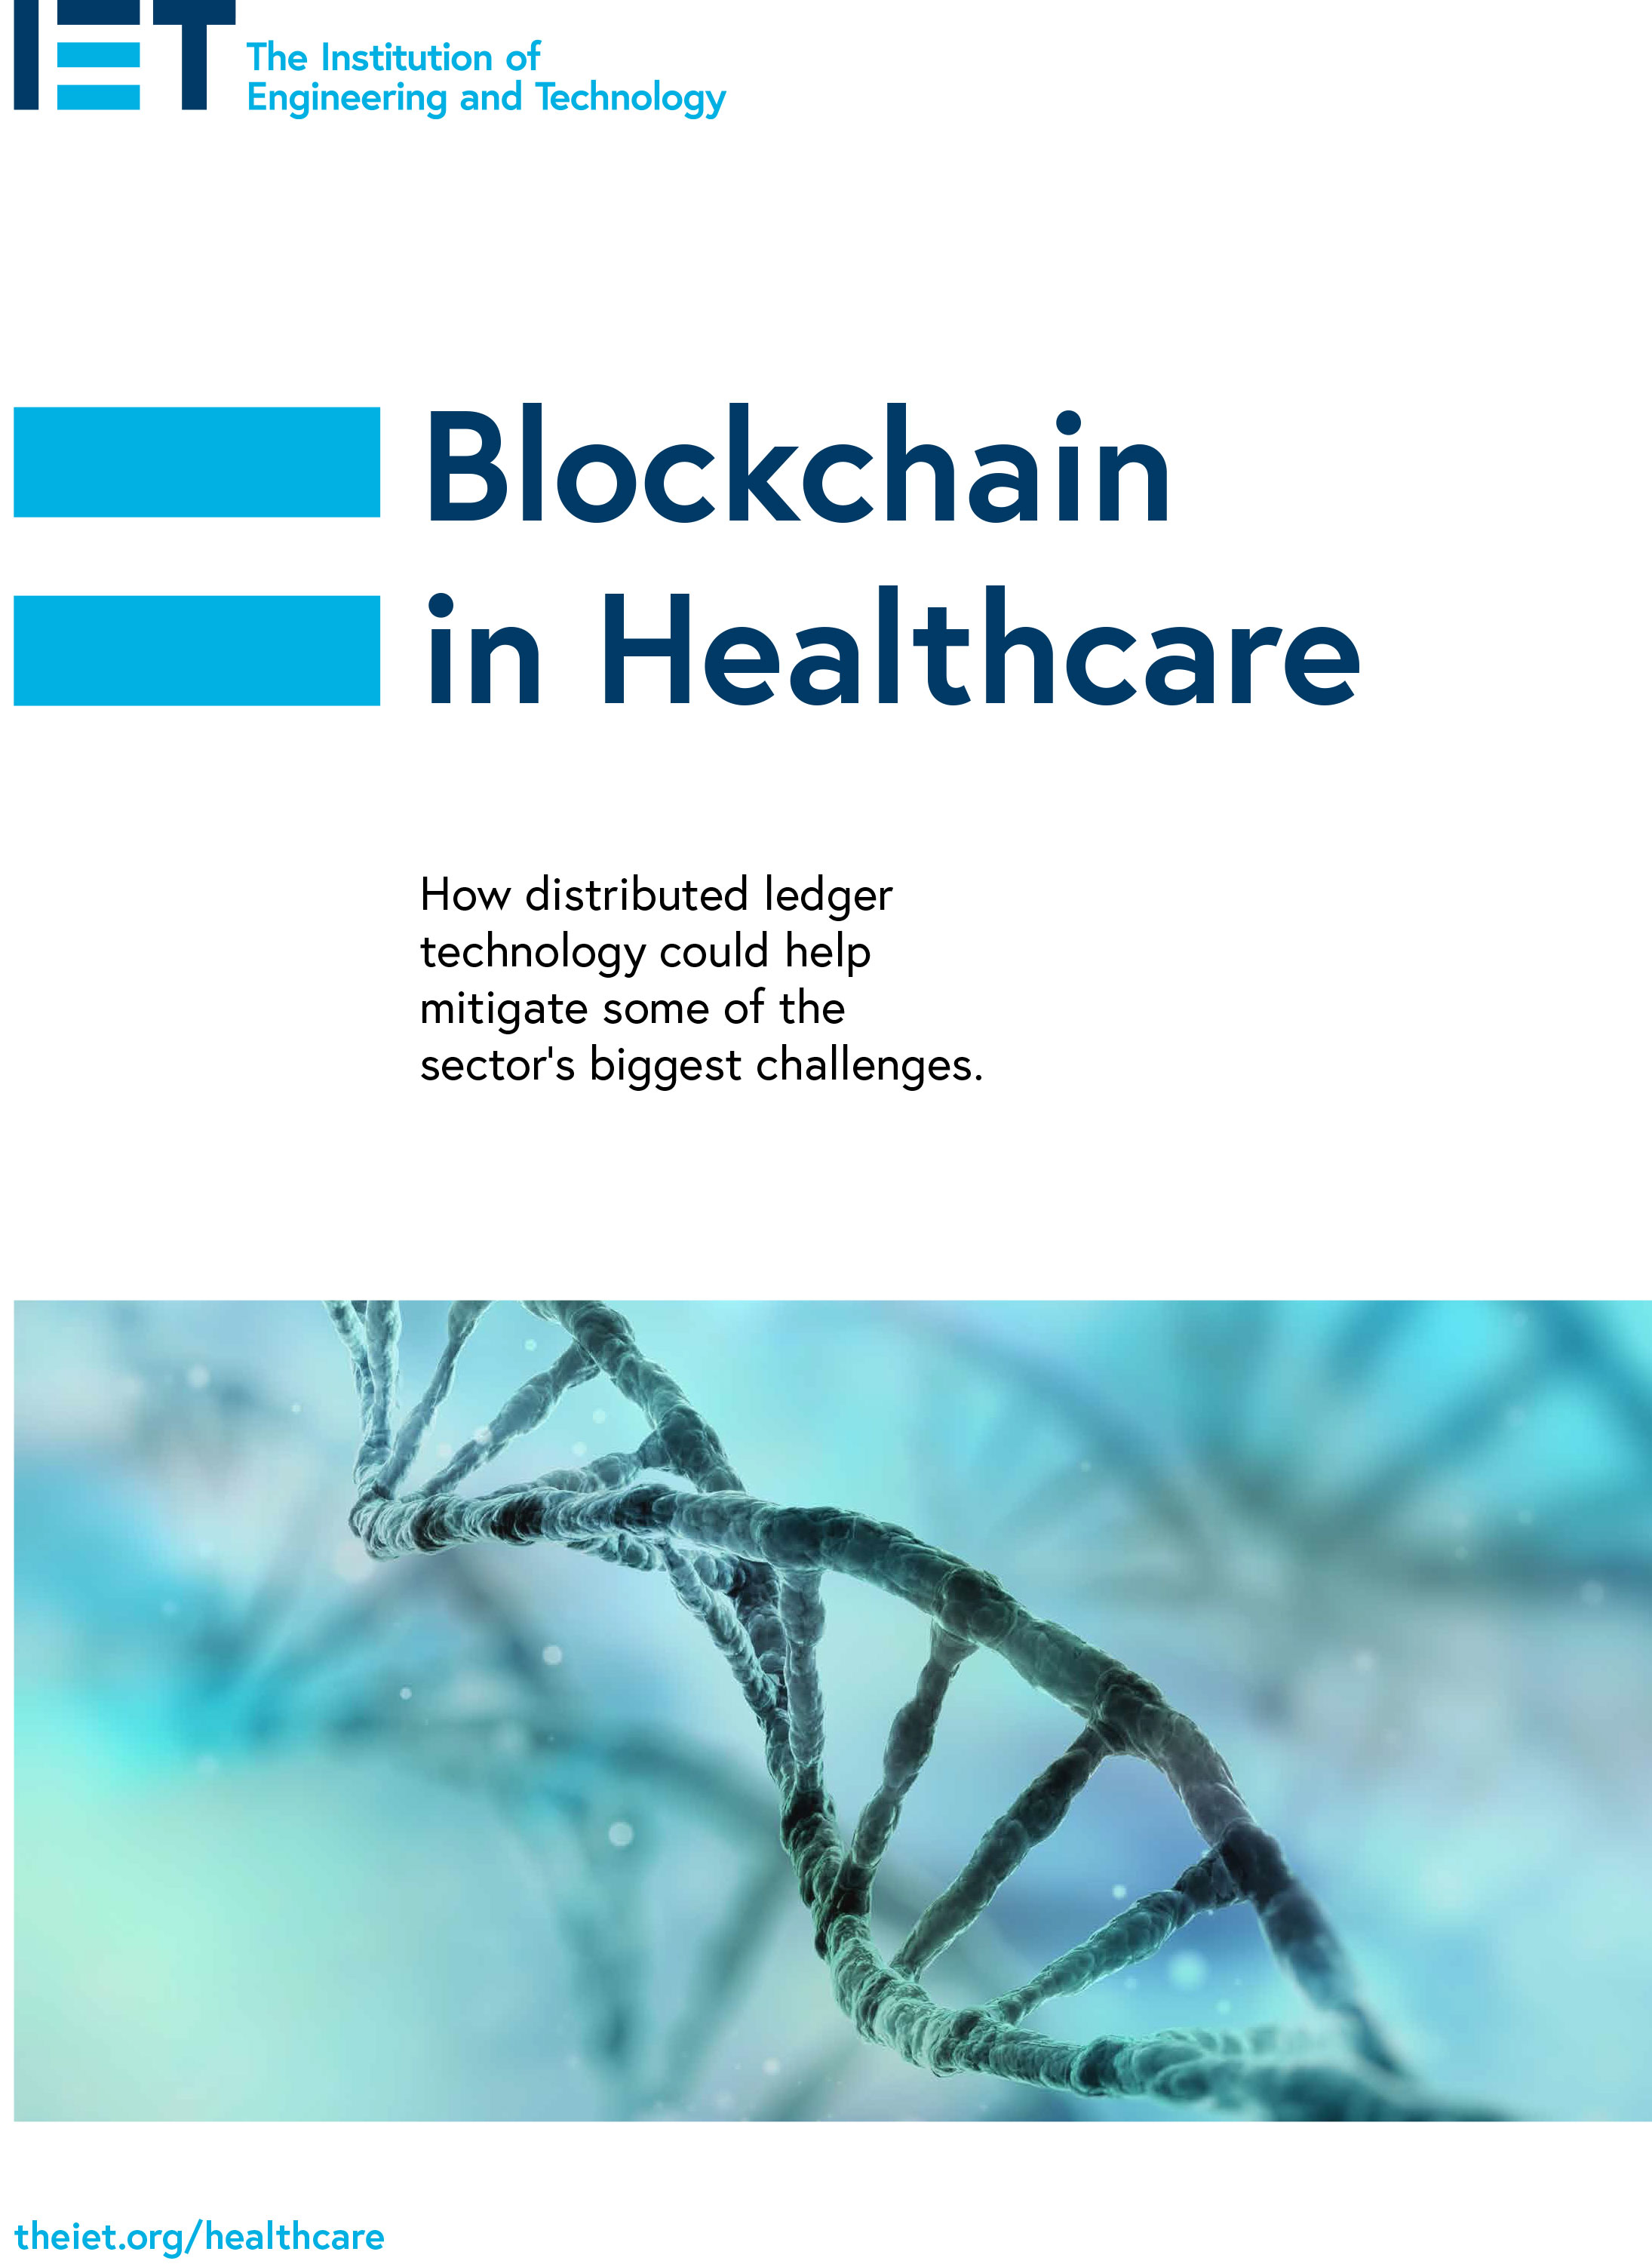 blockchain in healthcare research paper 2021